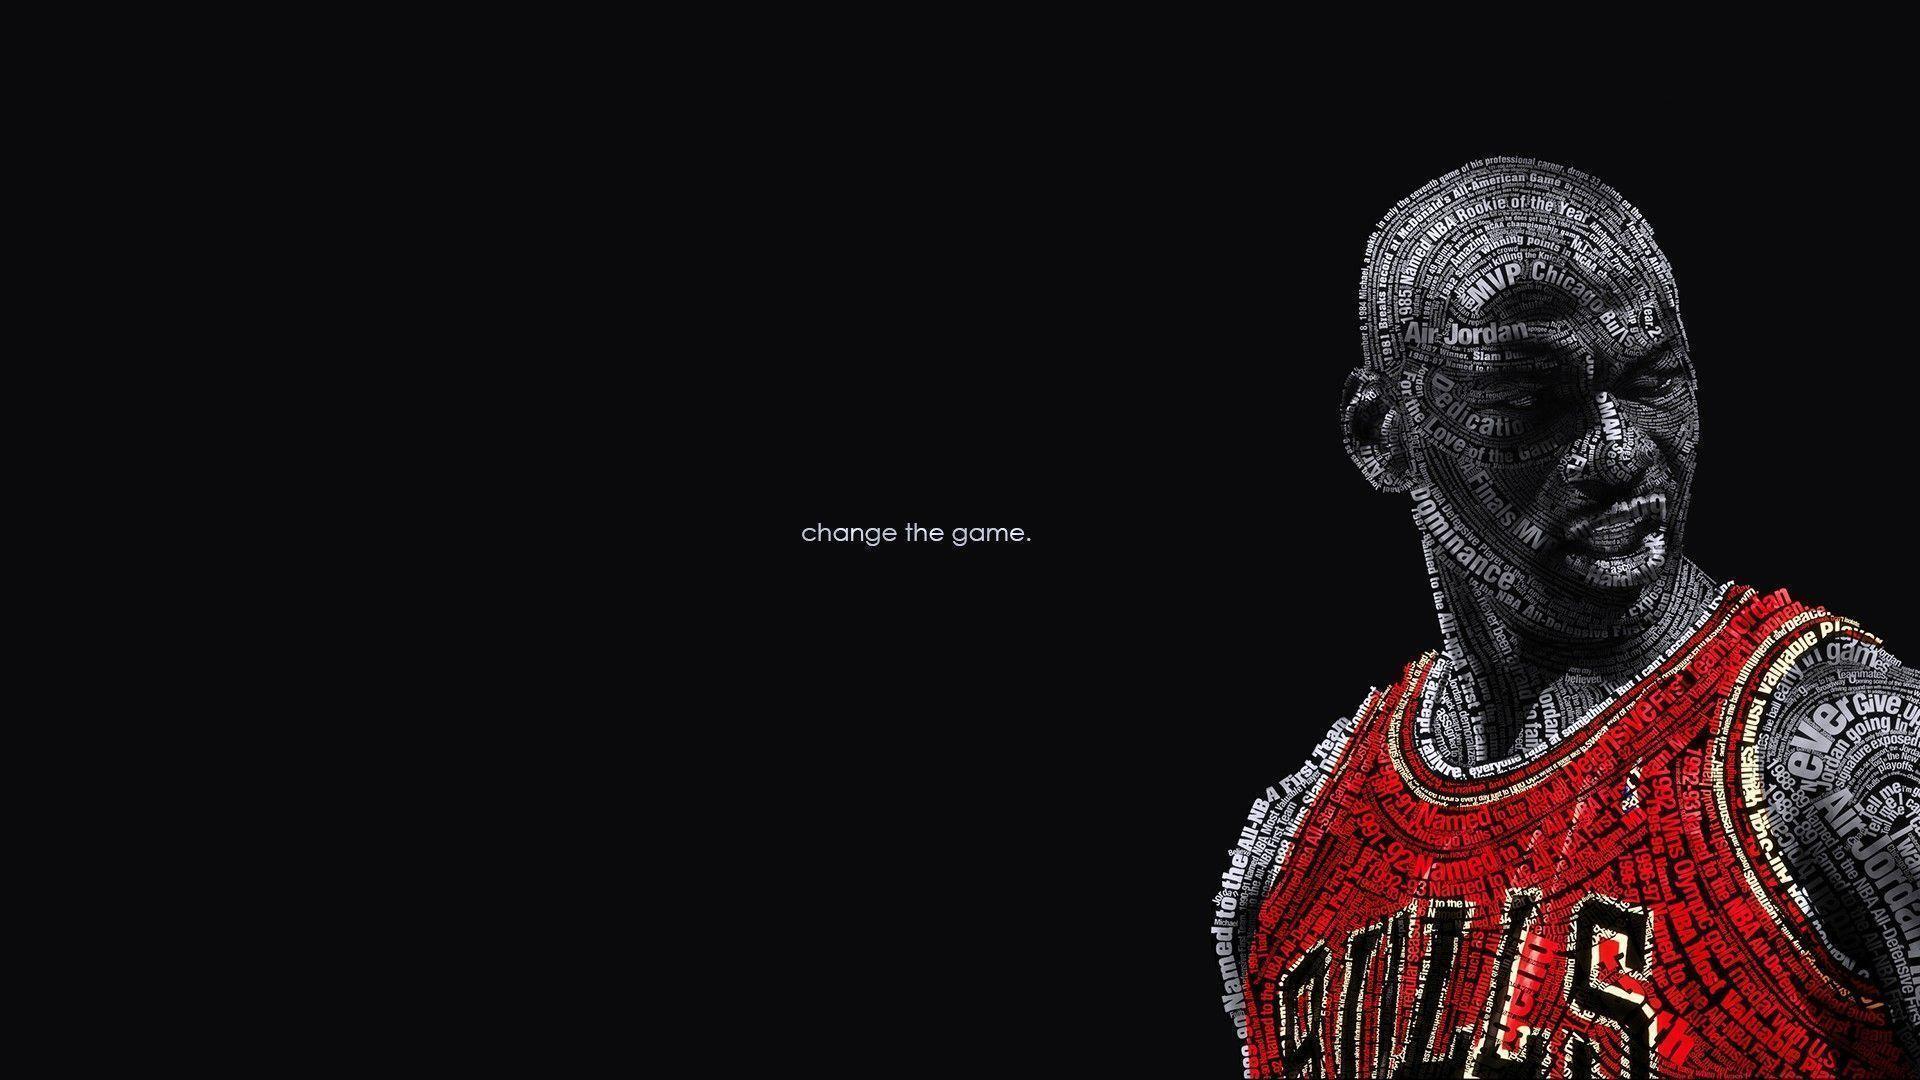 Michael Jordan Logo 37 117057 Image HD Wallpaper. Wallfoy